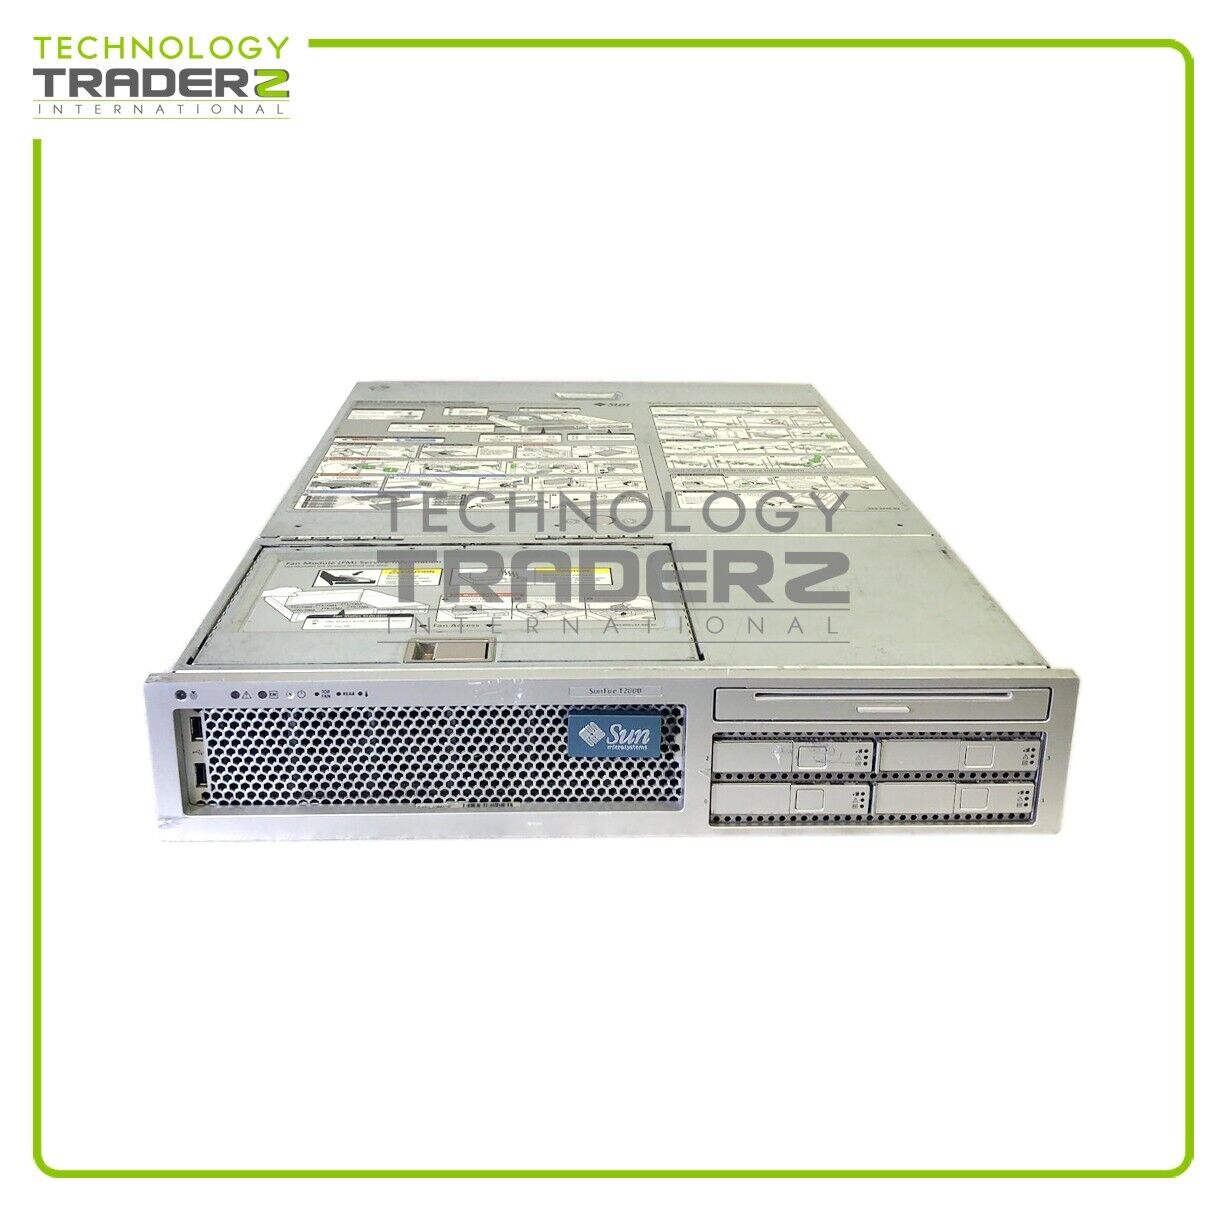 602-3653-02 Sun SunFire T2000 UltraSPARC T1 1.2GHz 2GB 4x SFF Server W/ 2x PWS